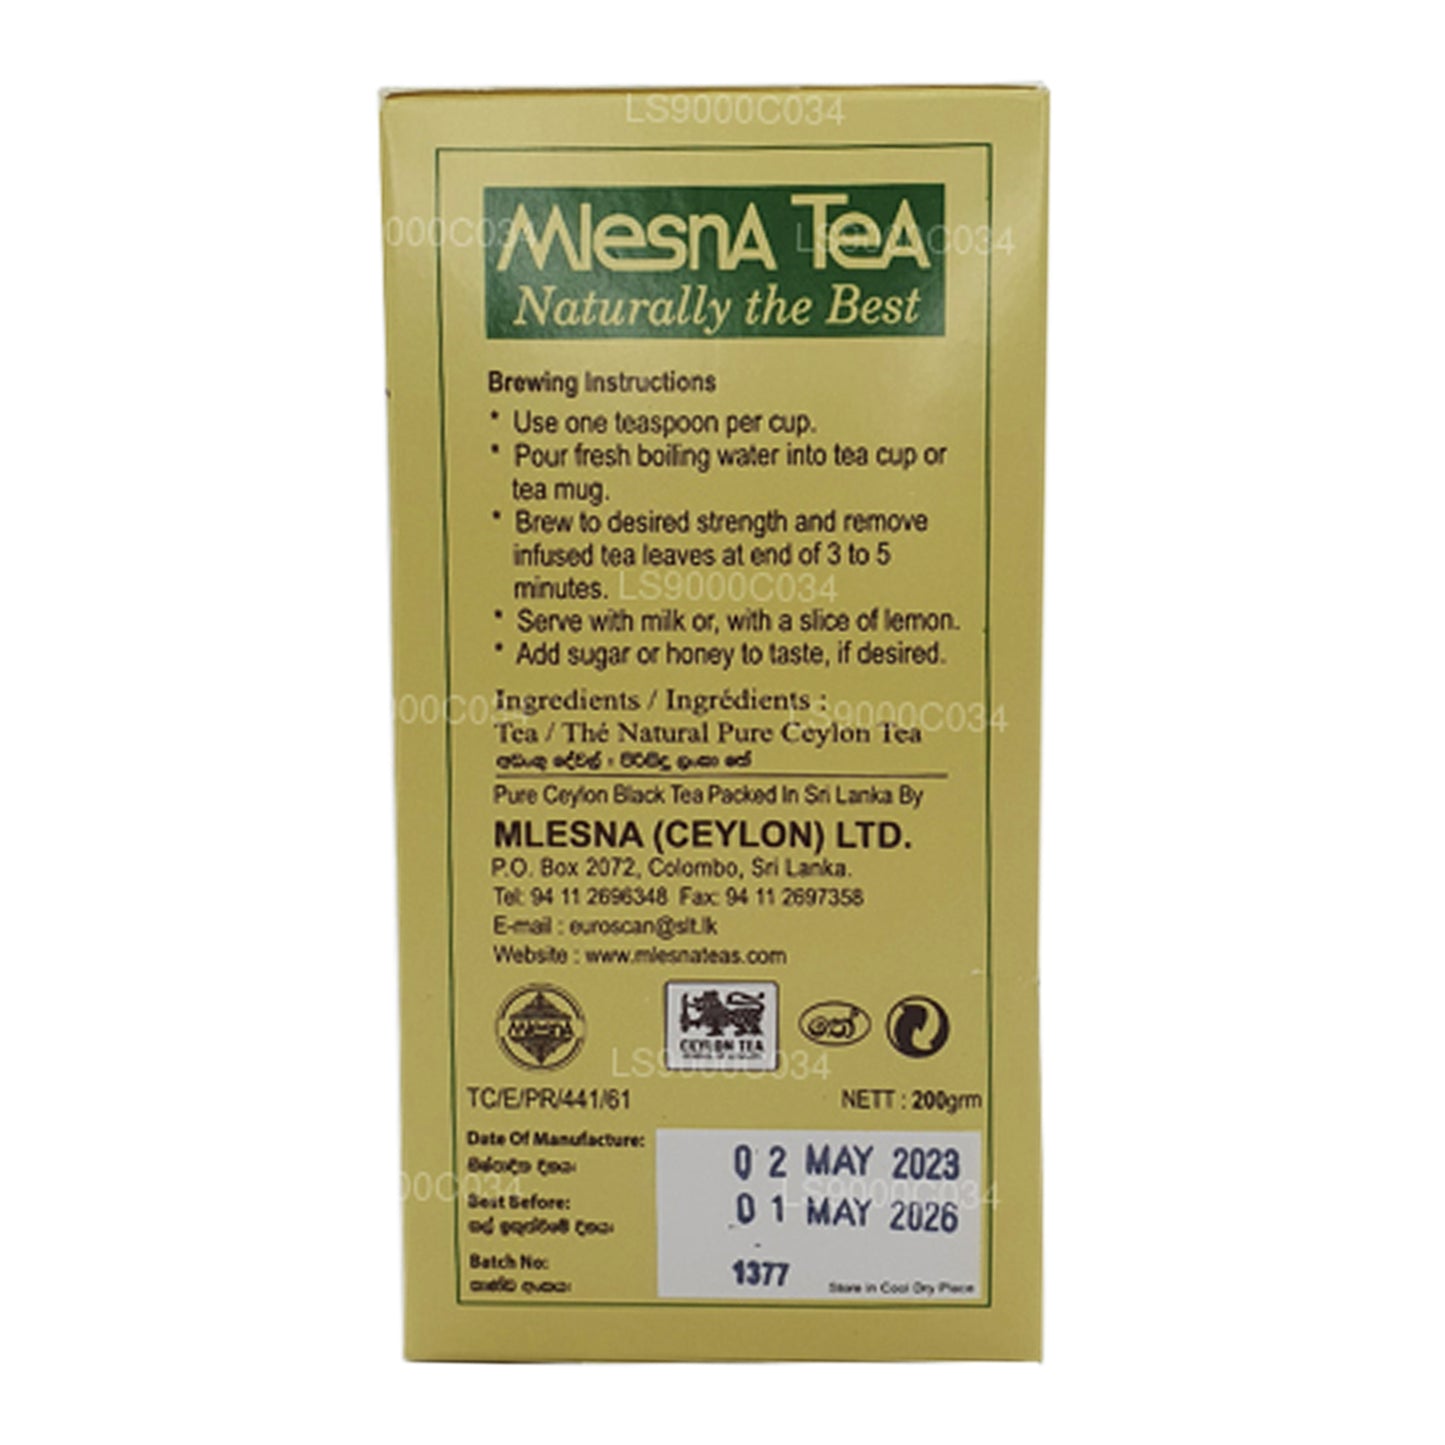 Mlesna Loolecondera BOP Fannings Strong Brew 散装茶 (200 g)